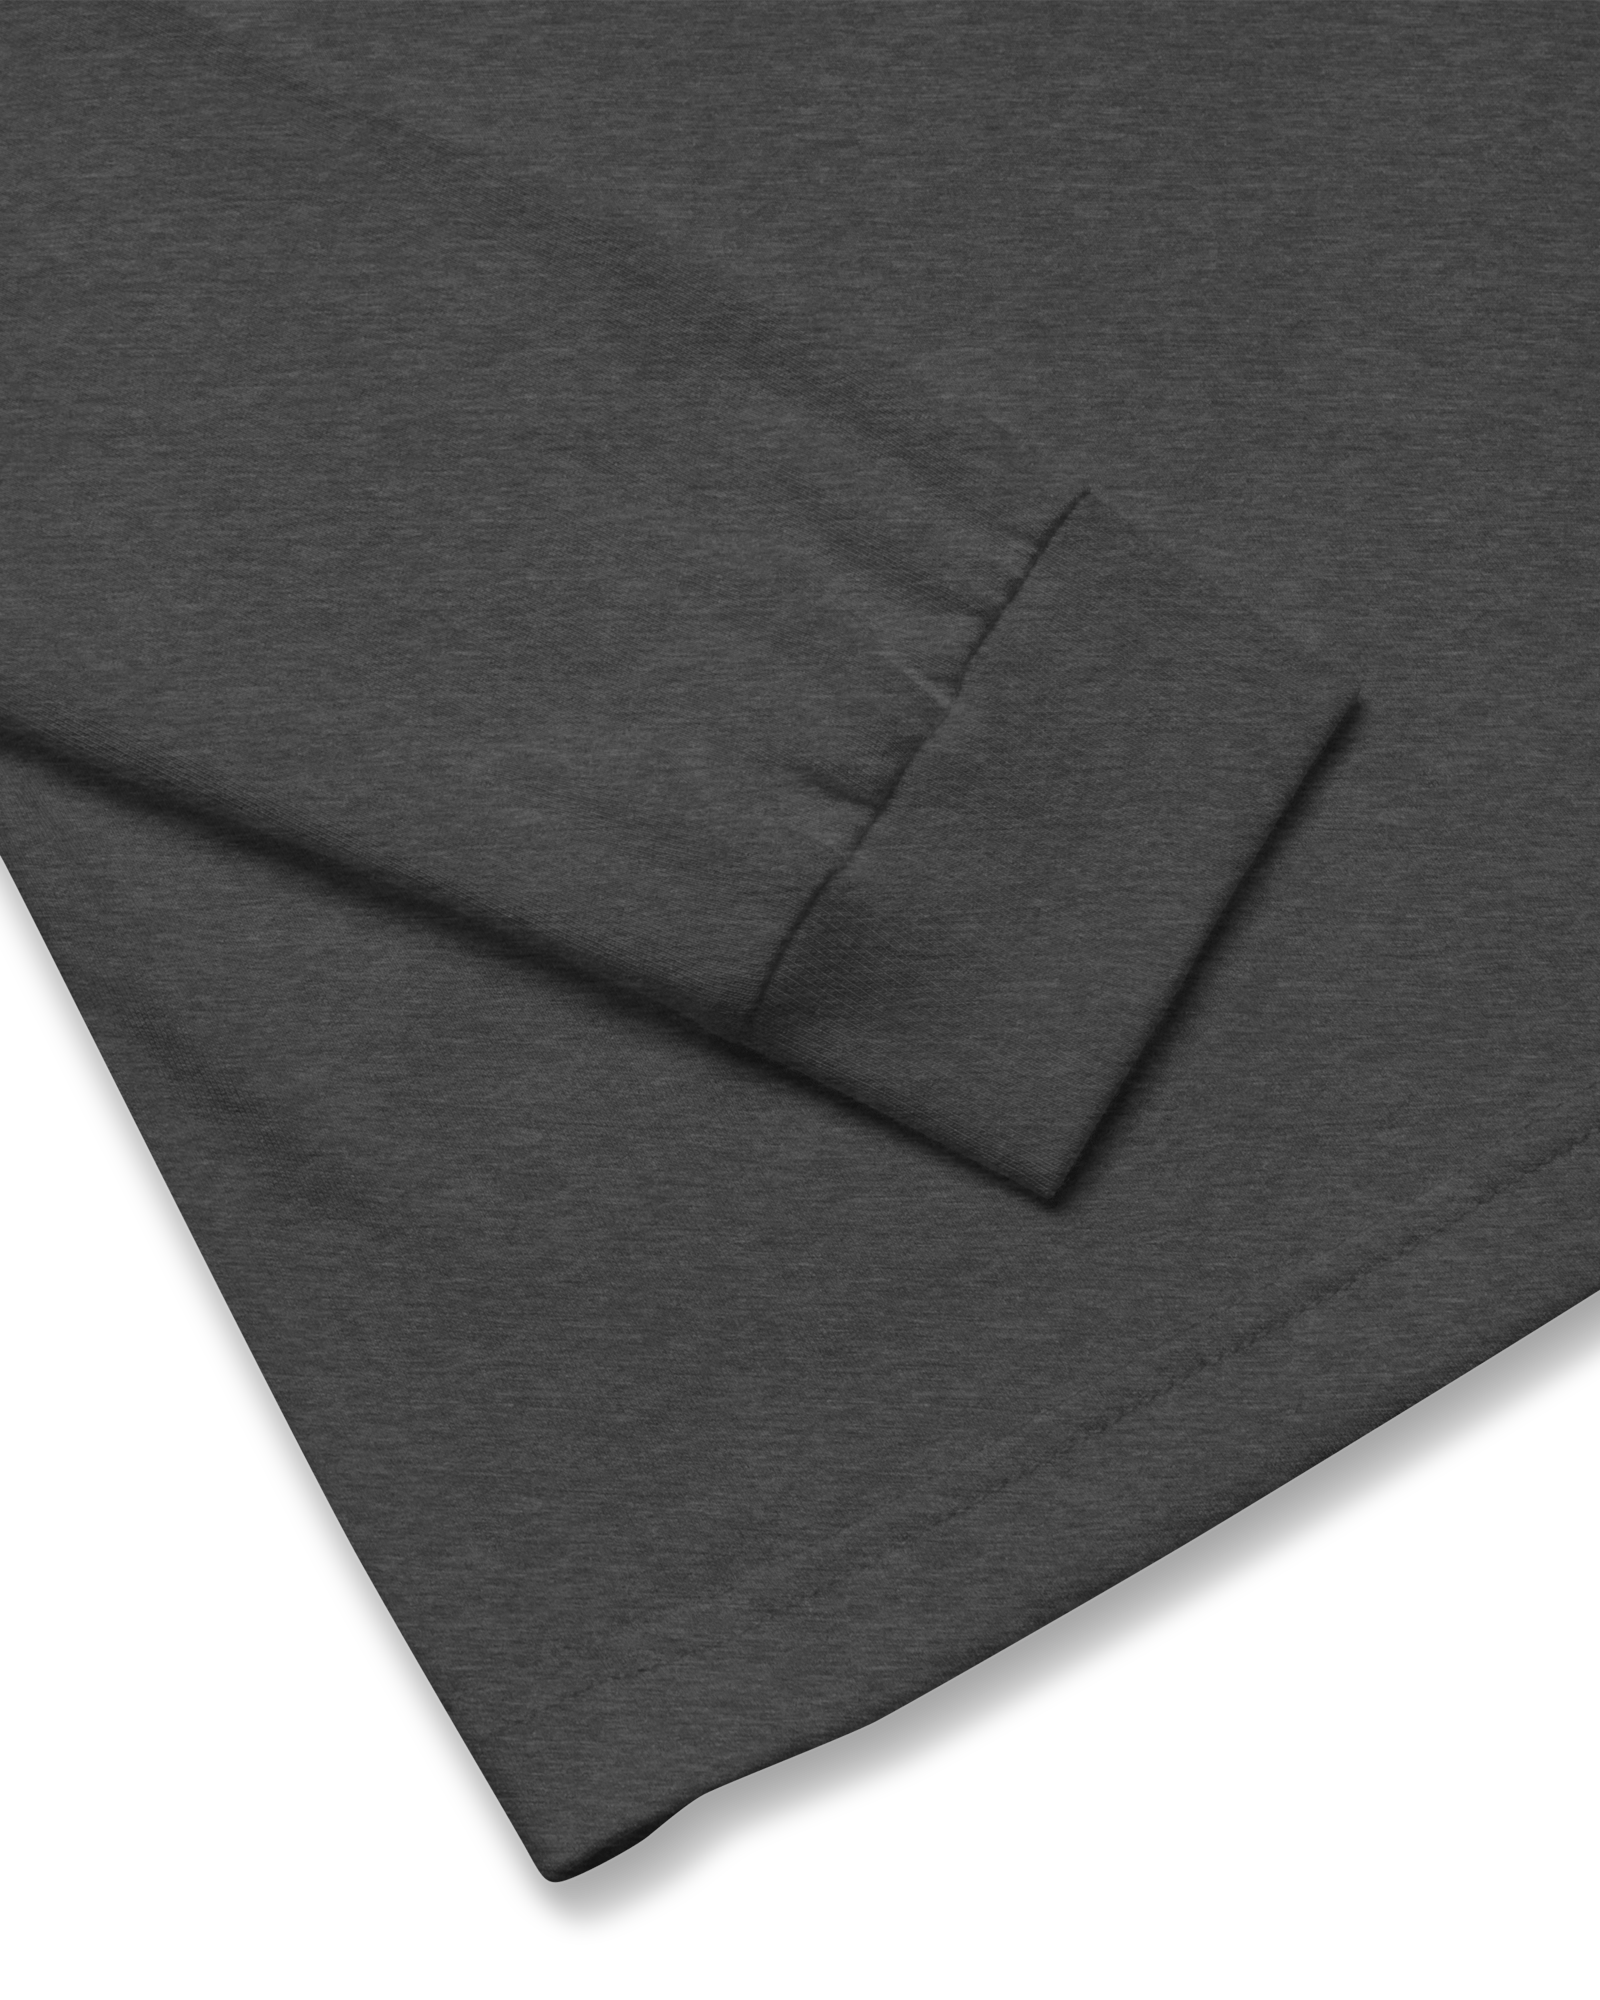 Permacrisis & Sons Long-Sleeve Shirt Jolly & Goode